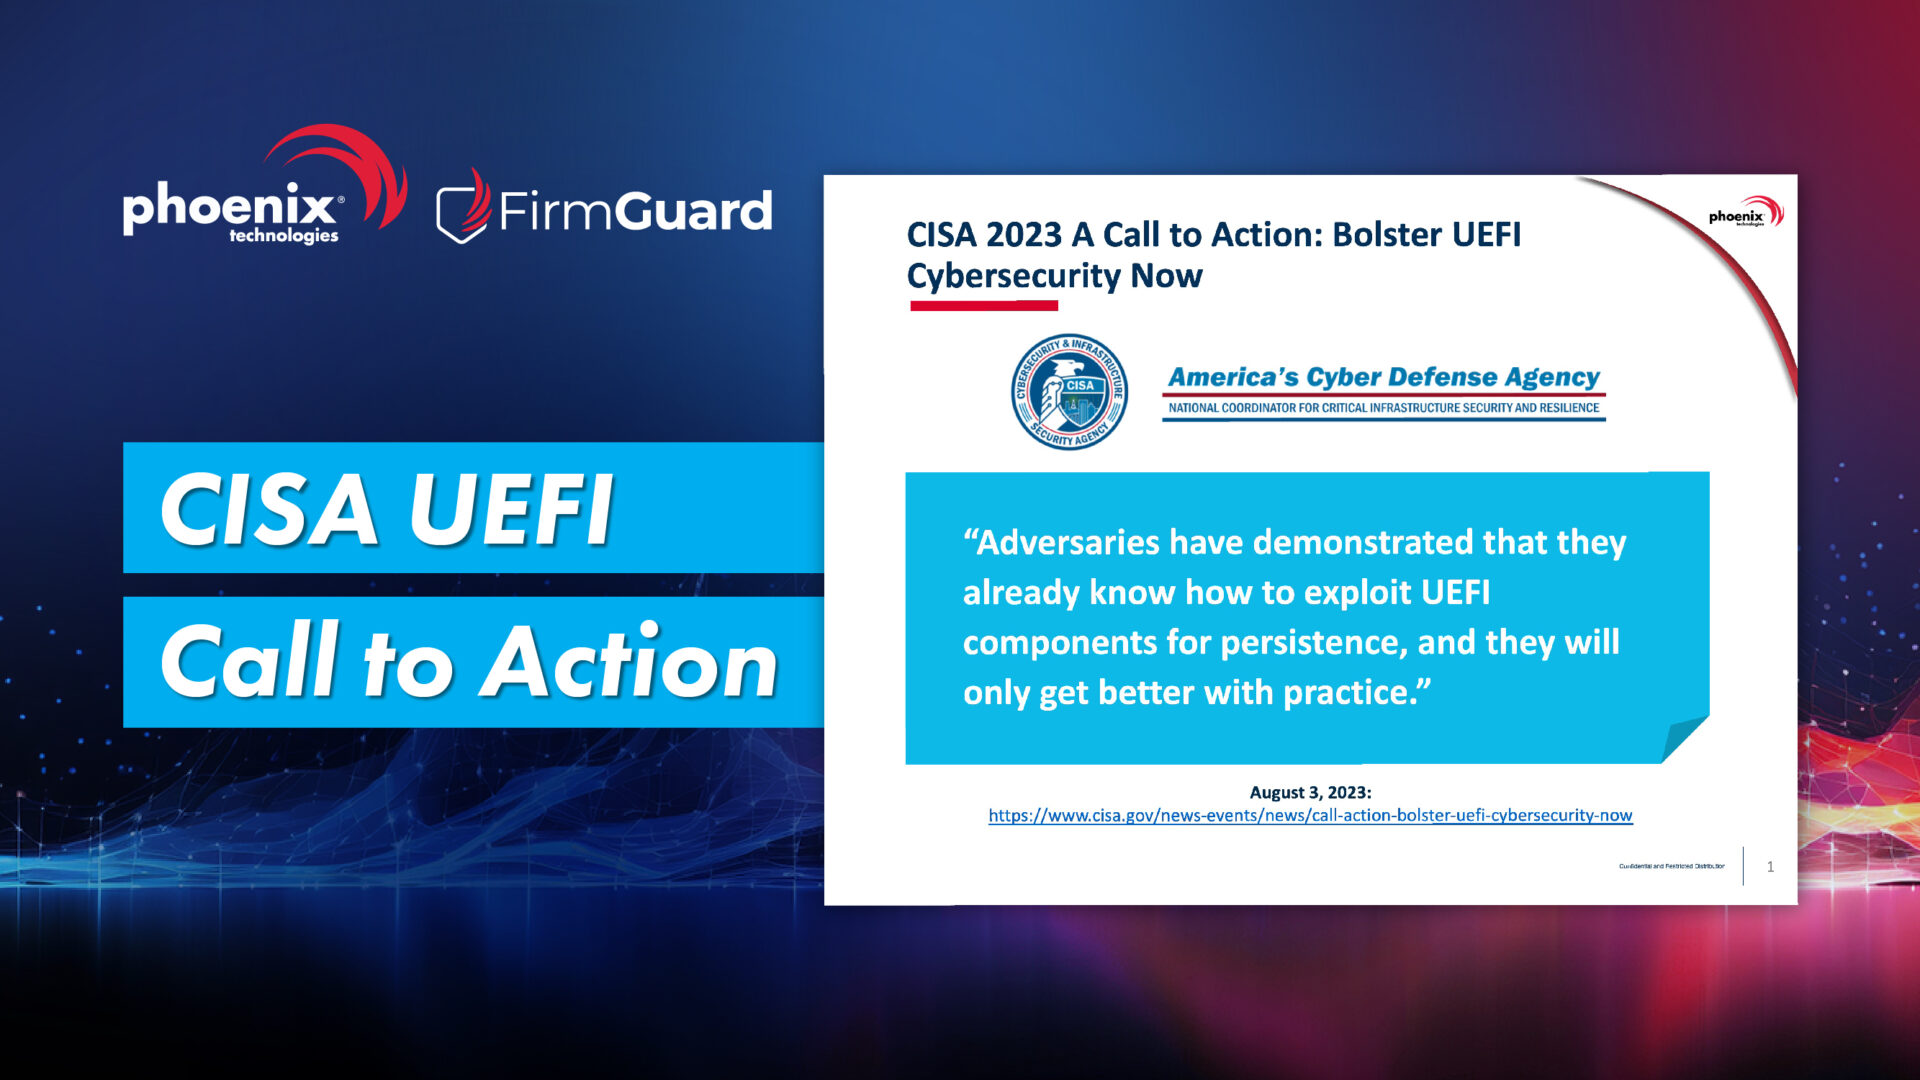 CISA UEFI Call to Action